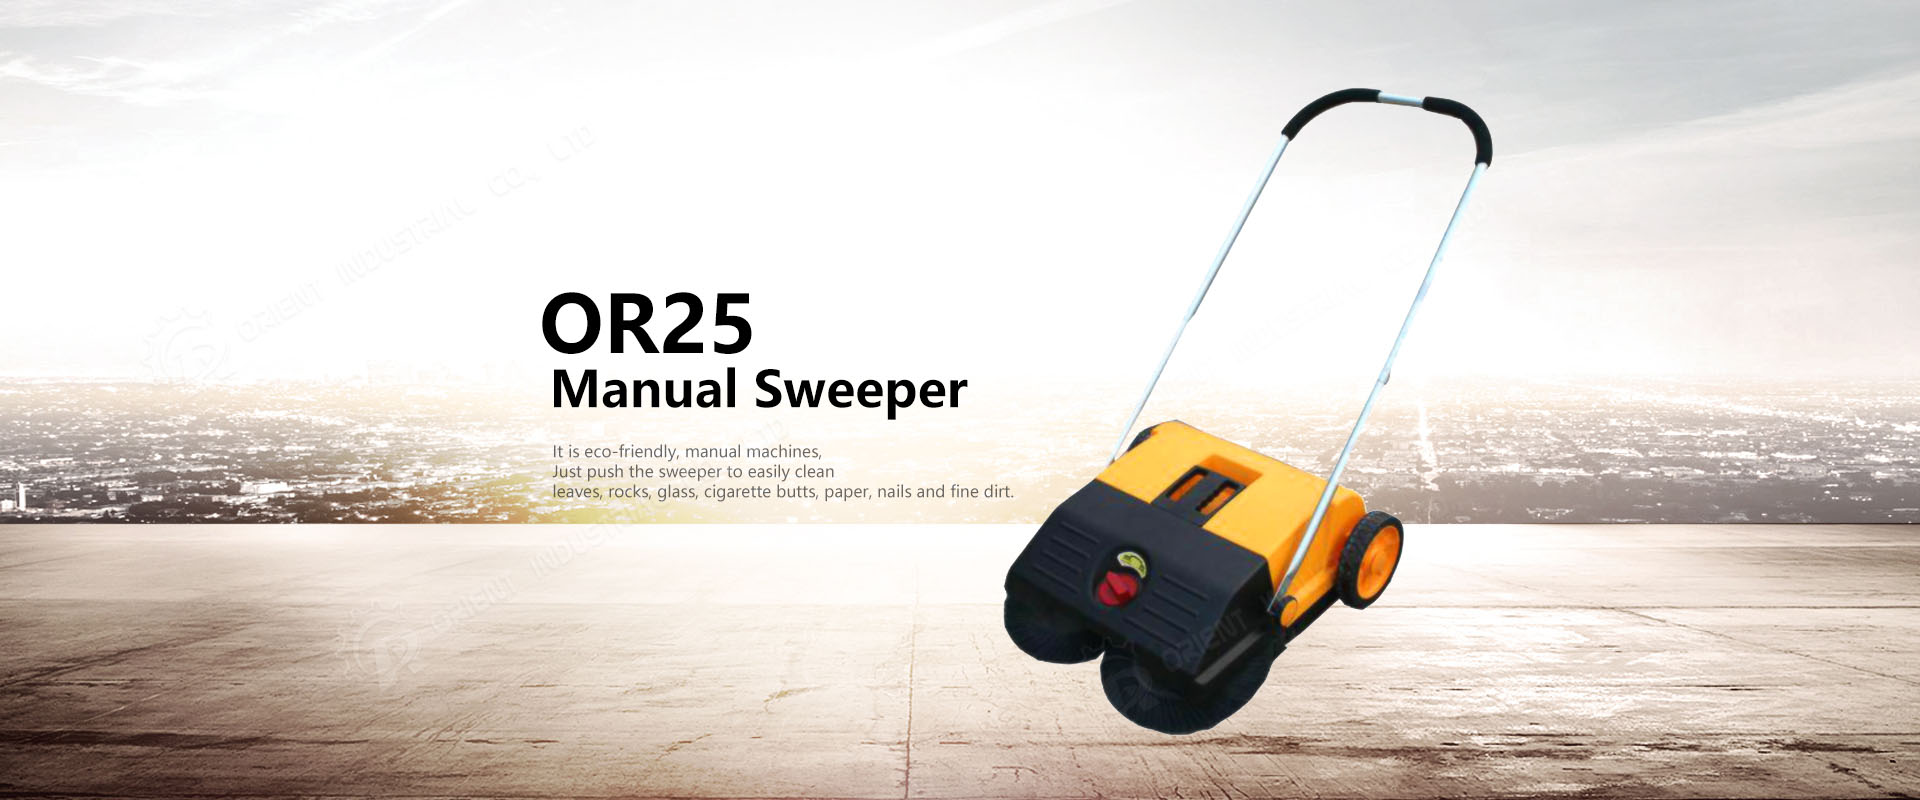 Manual Sweeper OR25